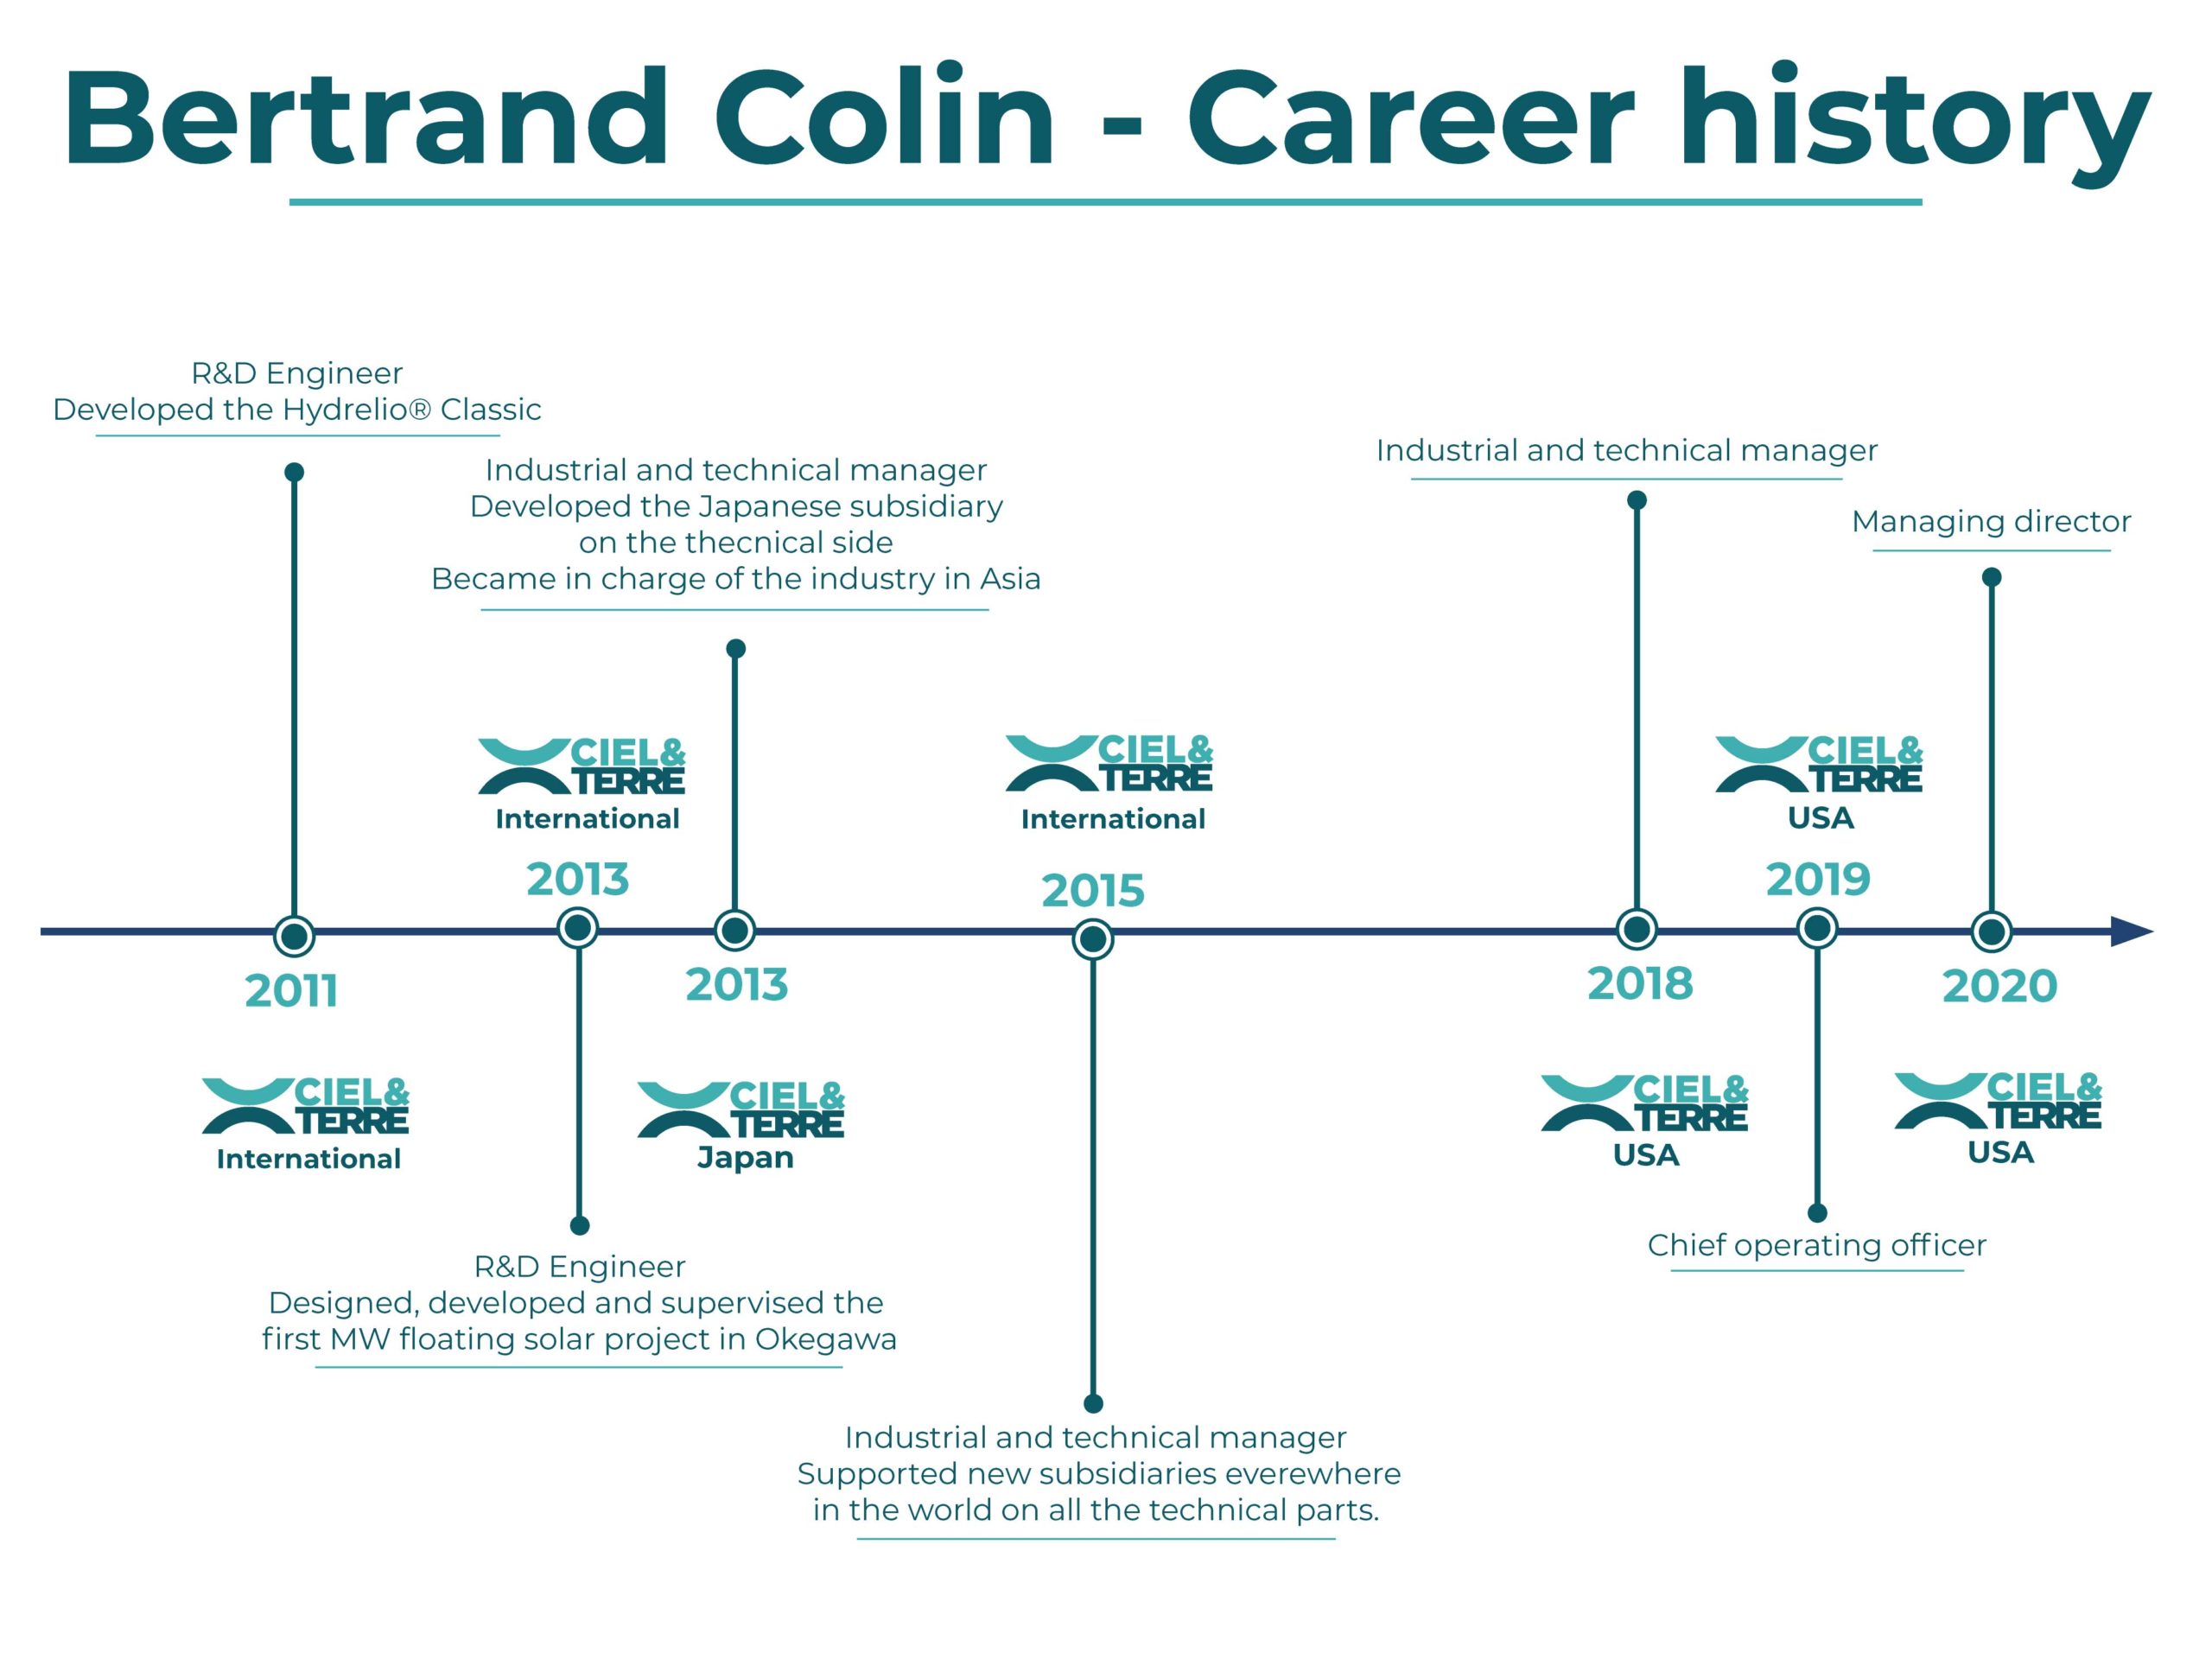 Bertrand Colin's career journey CEO of Ciel et Terre USA